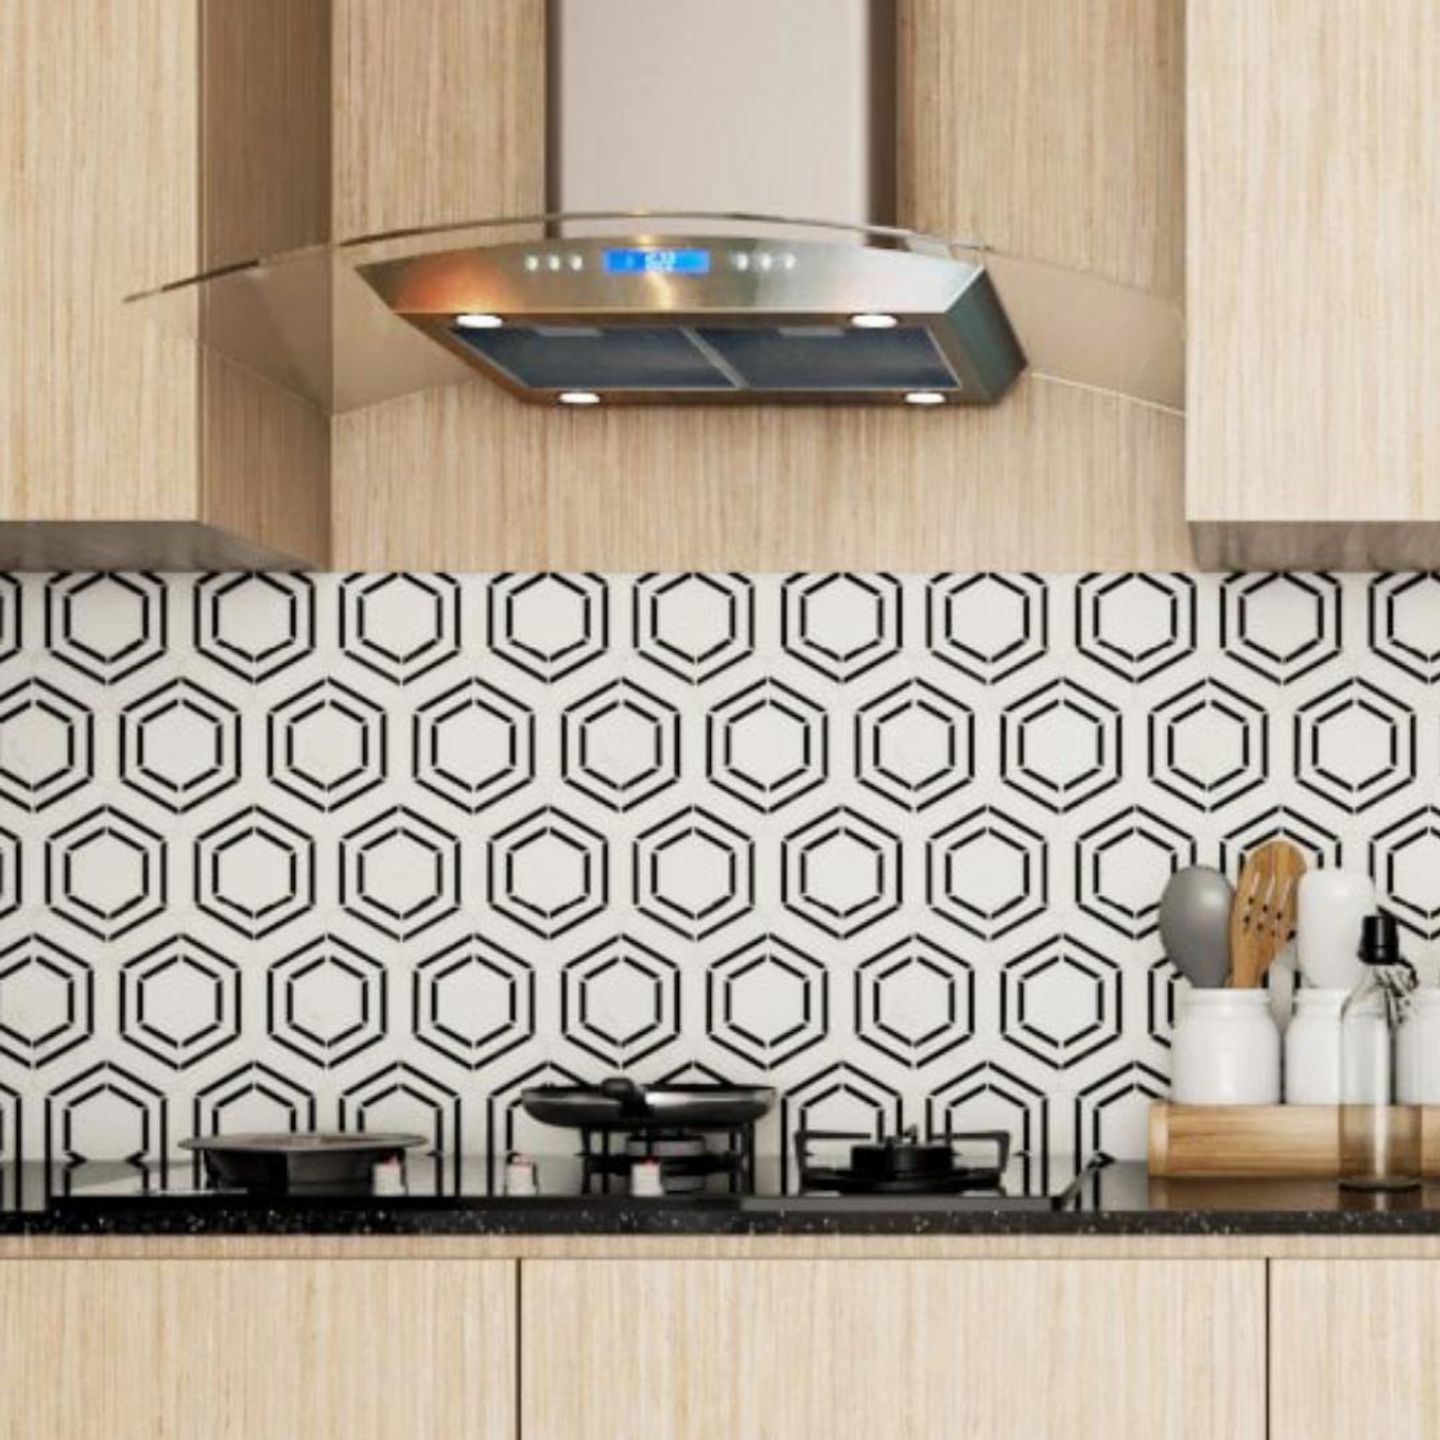 Hexagonal Kitchen Tiles Design - Livspace